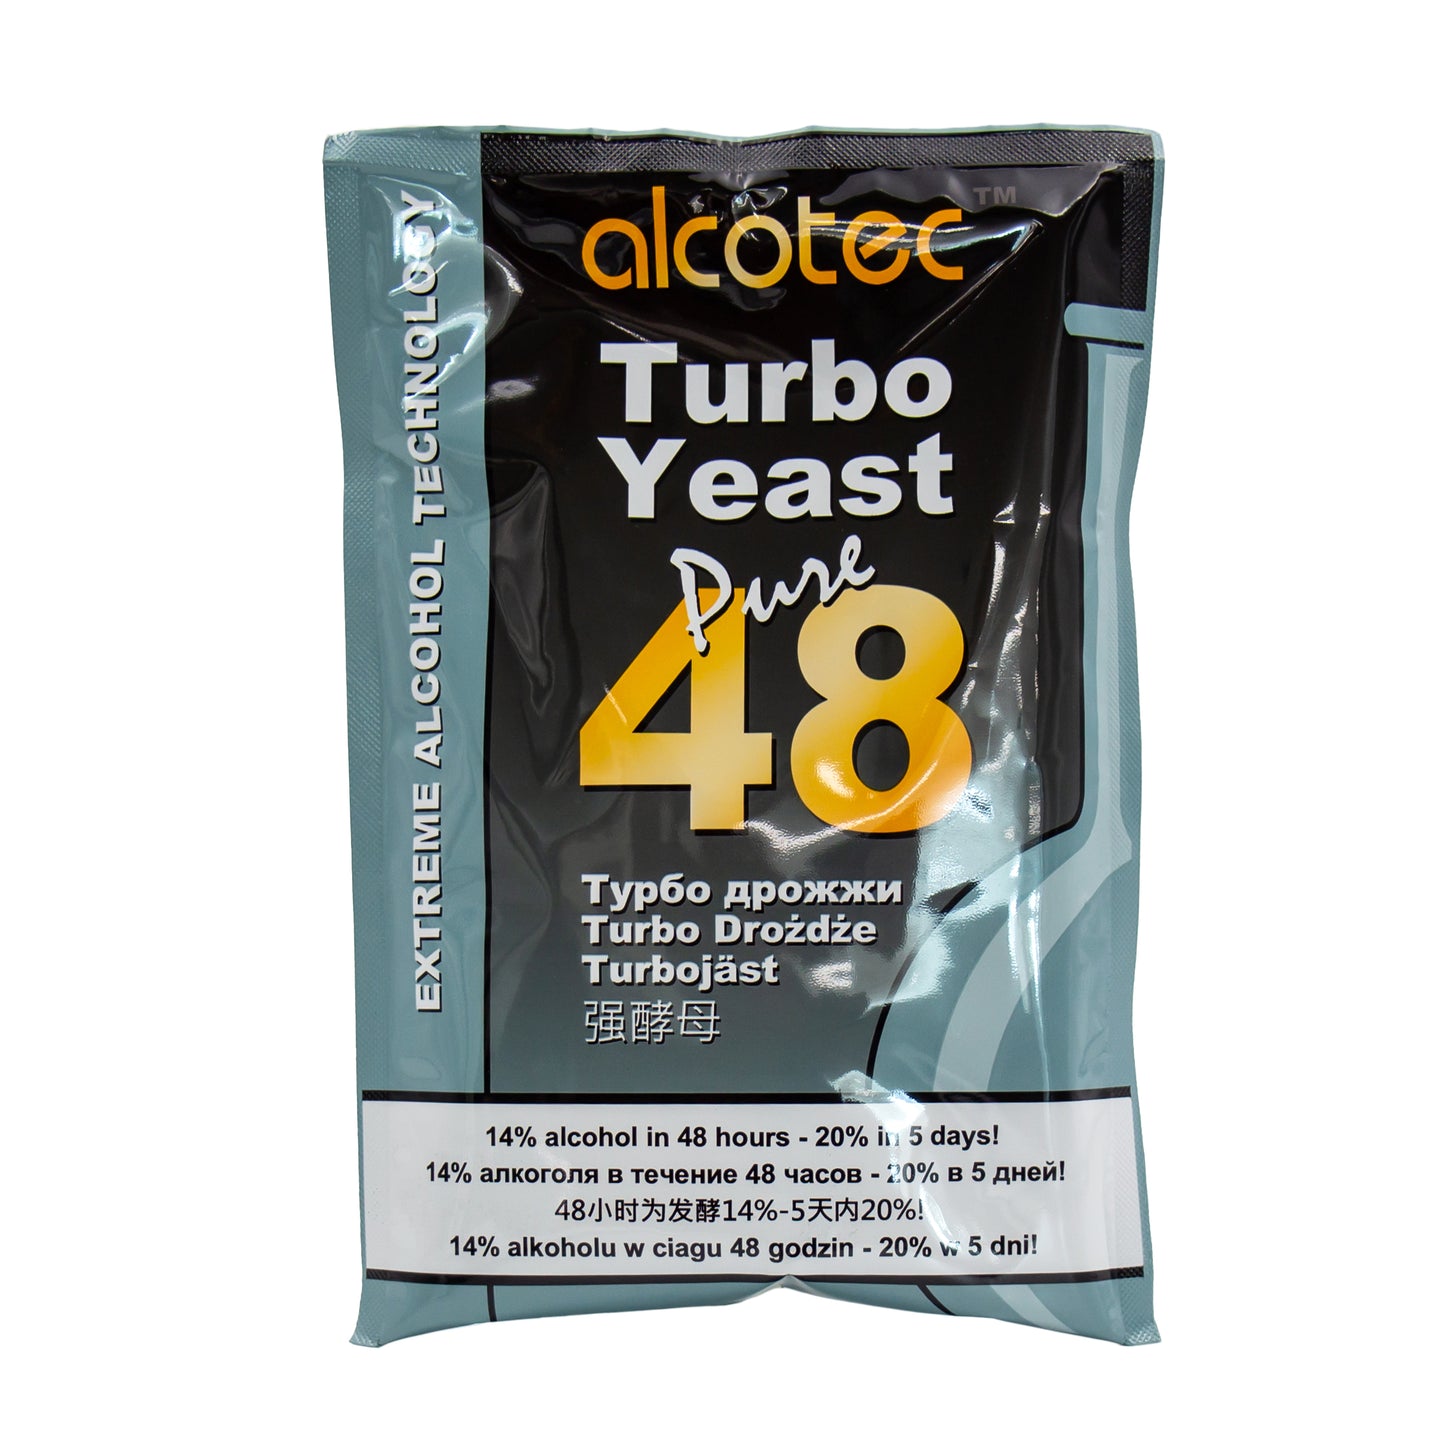 Alcotec turbo yeast 48 for distilling